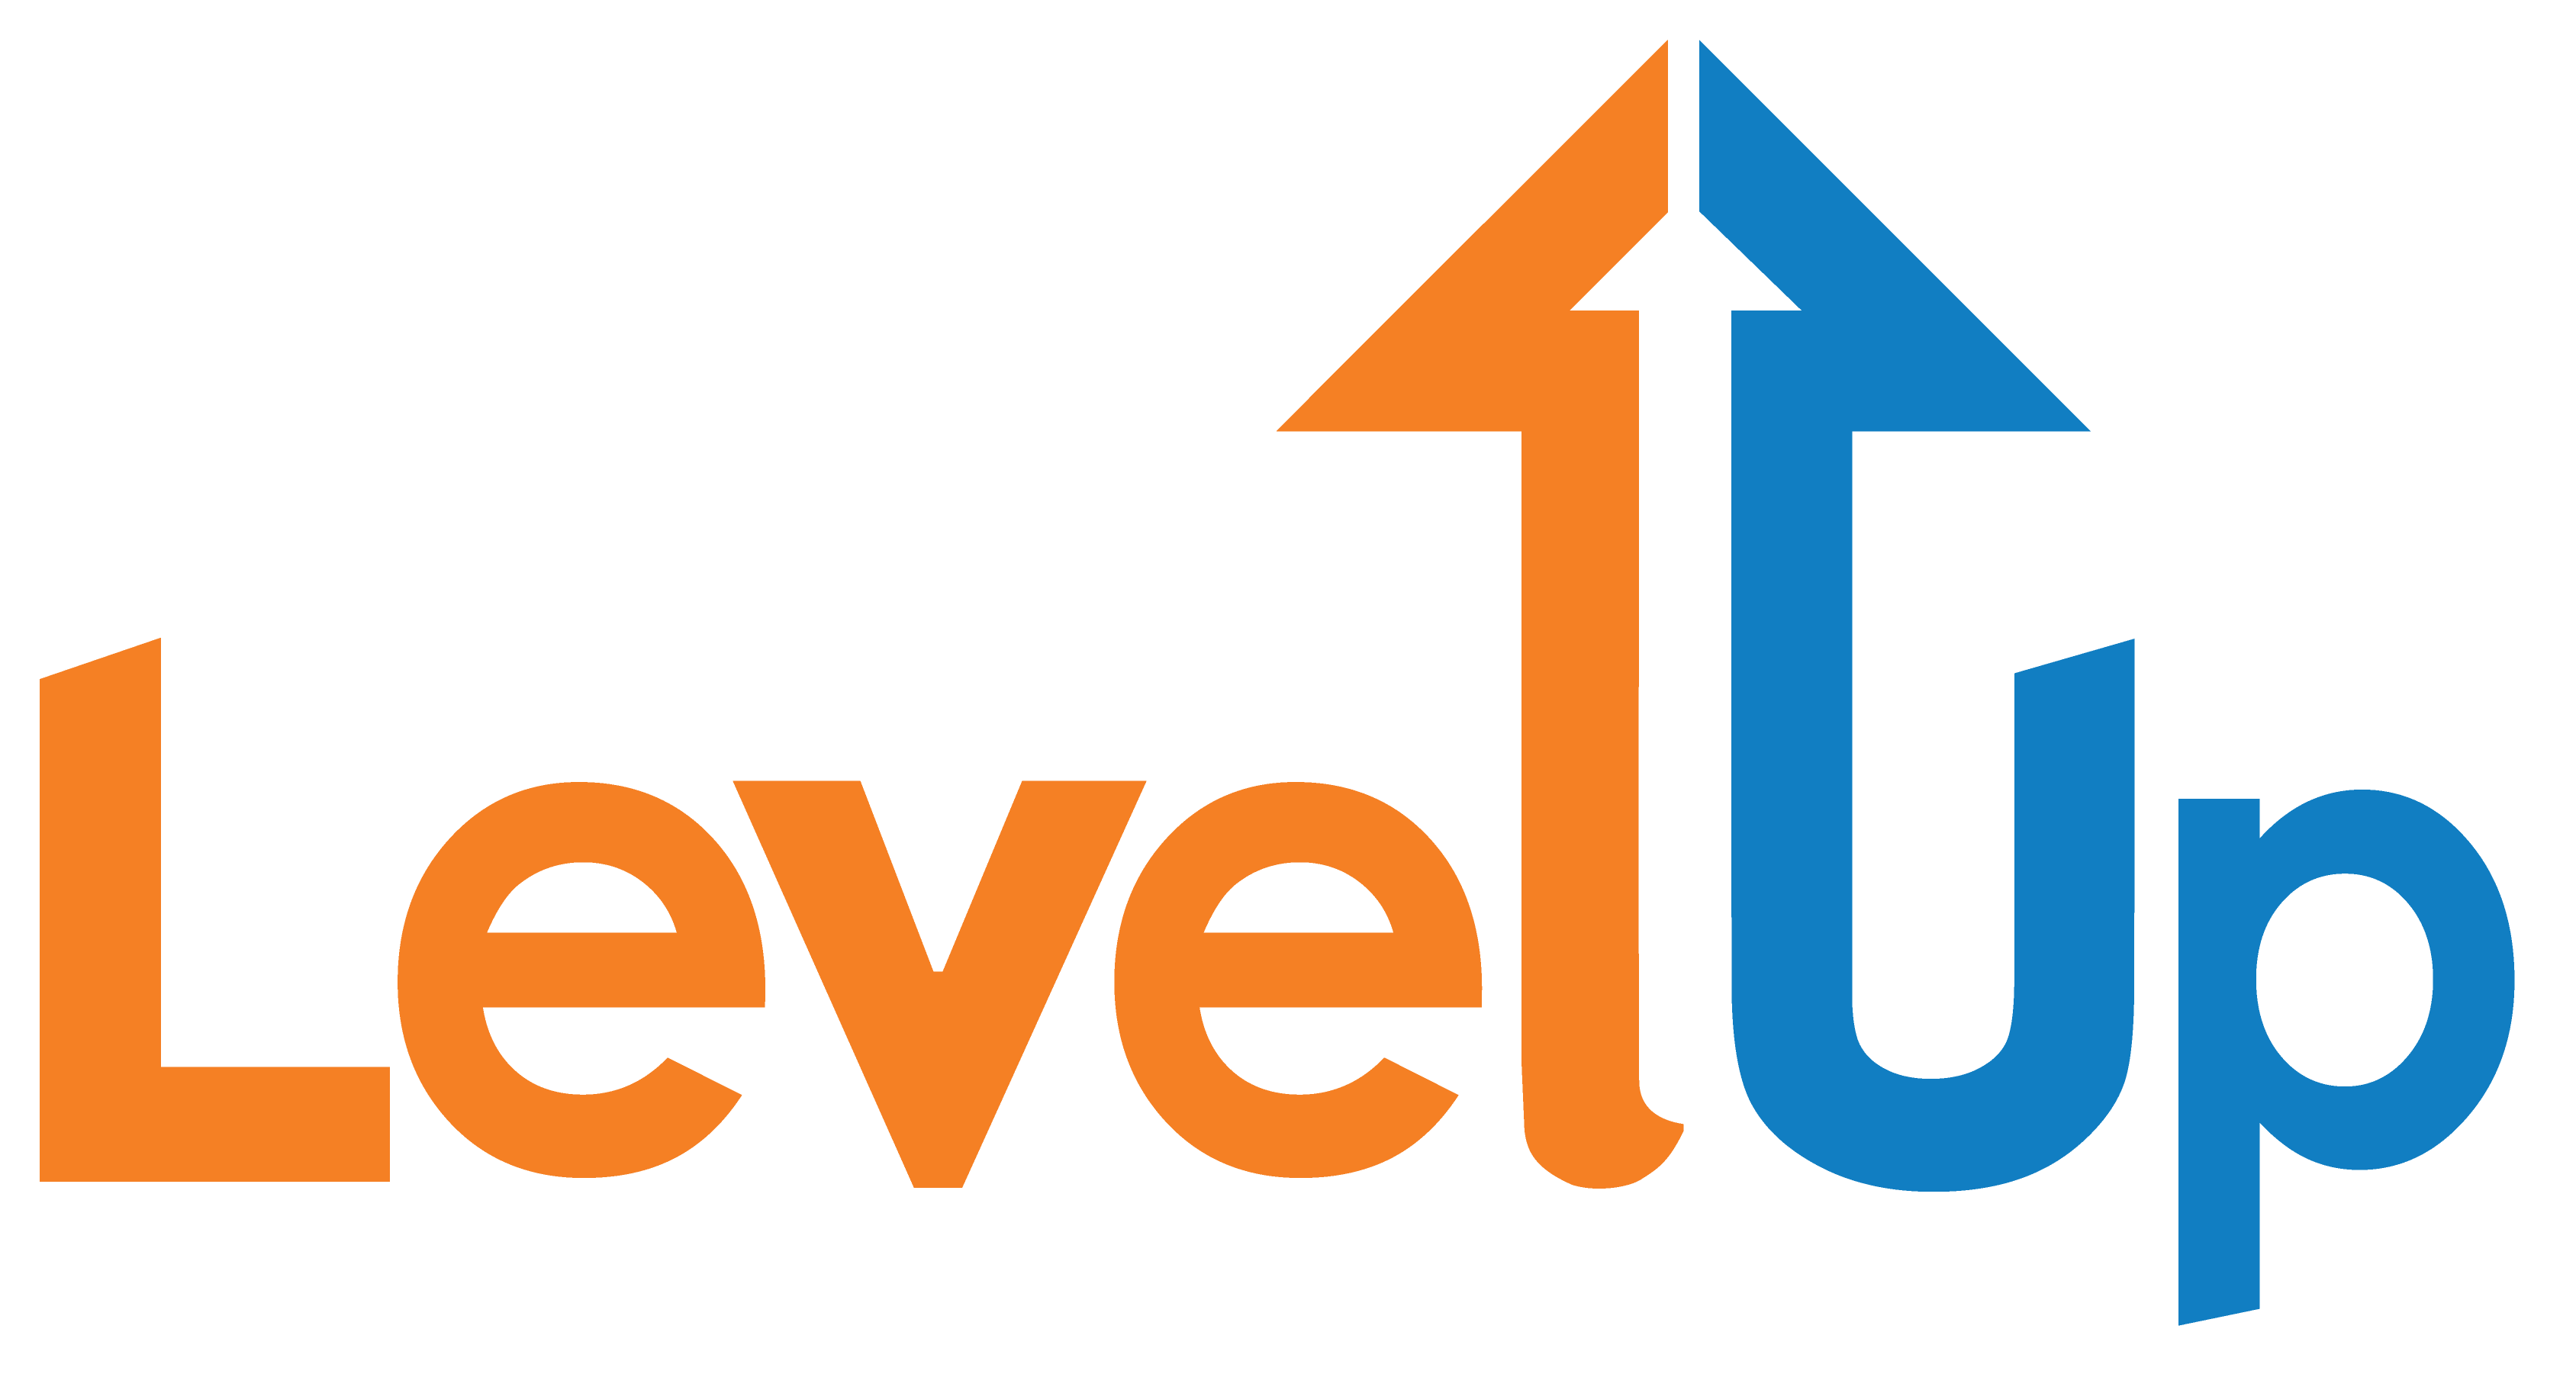 How to level up. Up логотип. Lvl логотип. Логотип вверх. Level up лого.